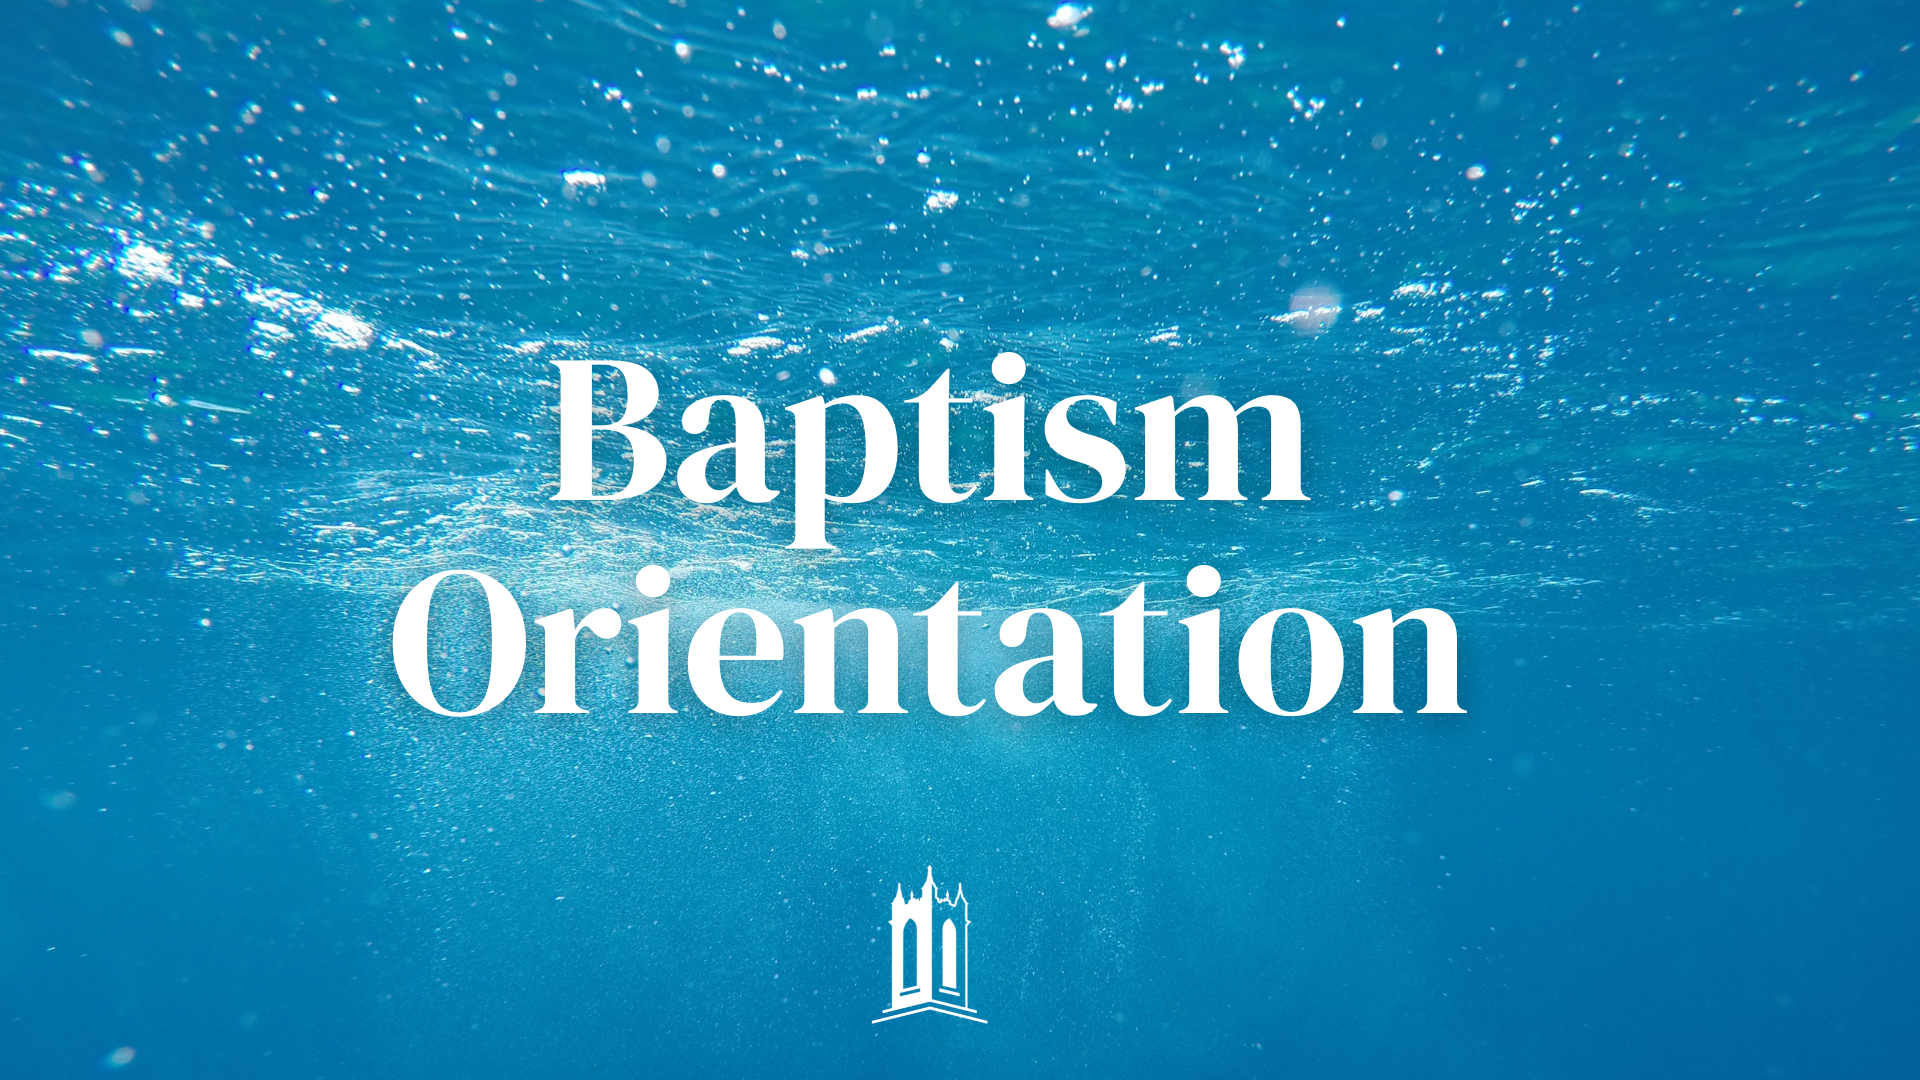 Baptism Orientation